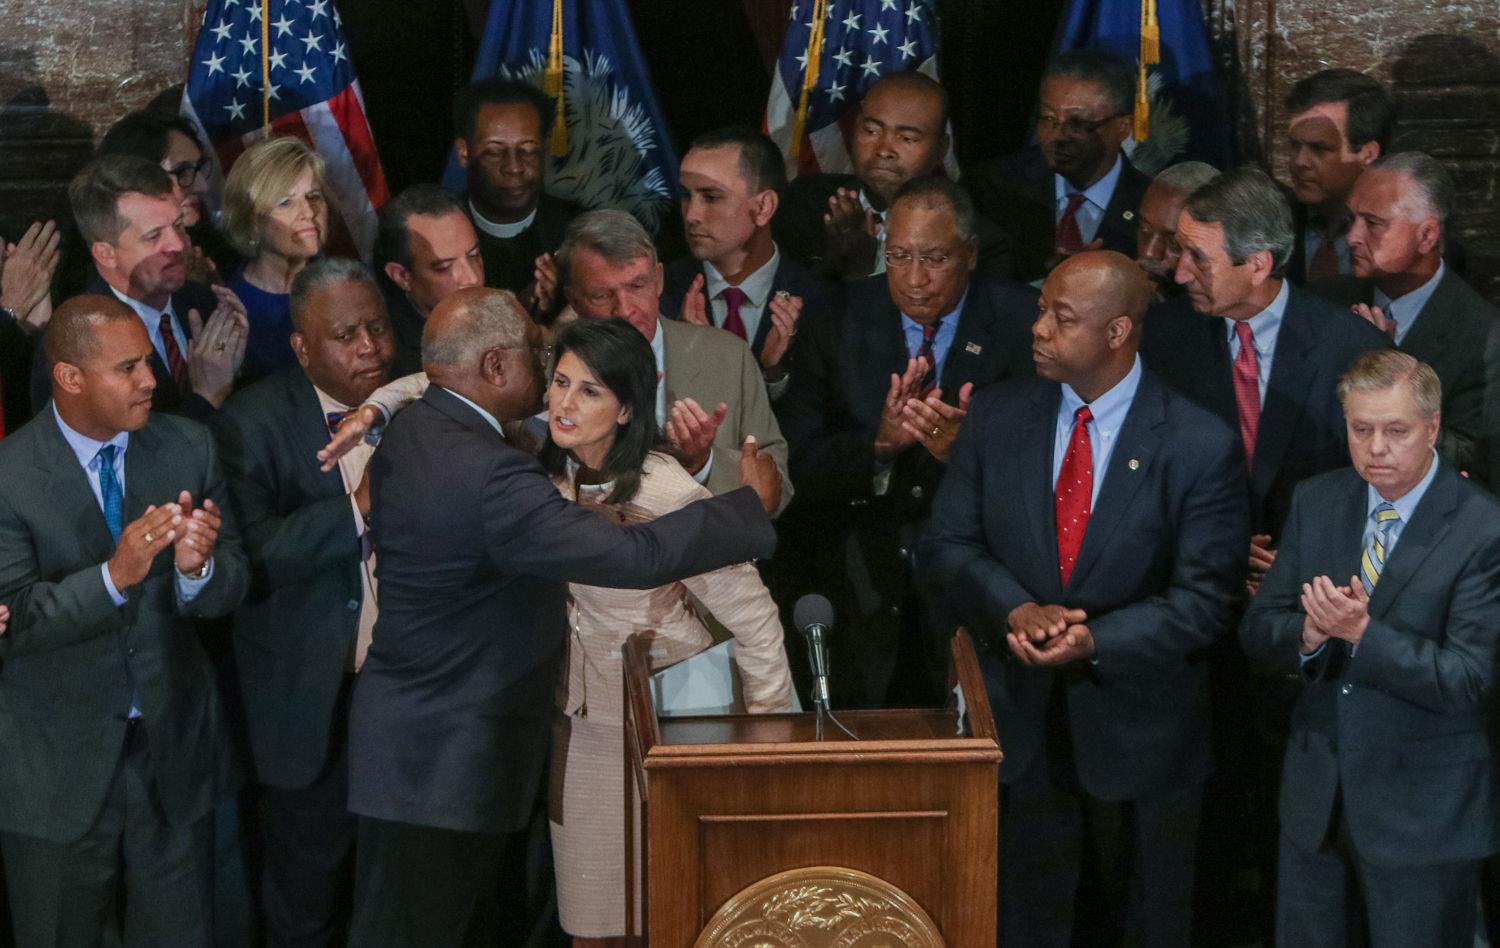 Gov. Nikki Haley calls for removal of Confederate flag - The Pitt News